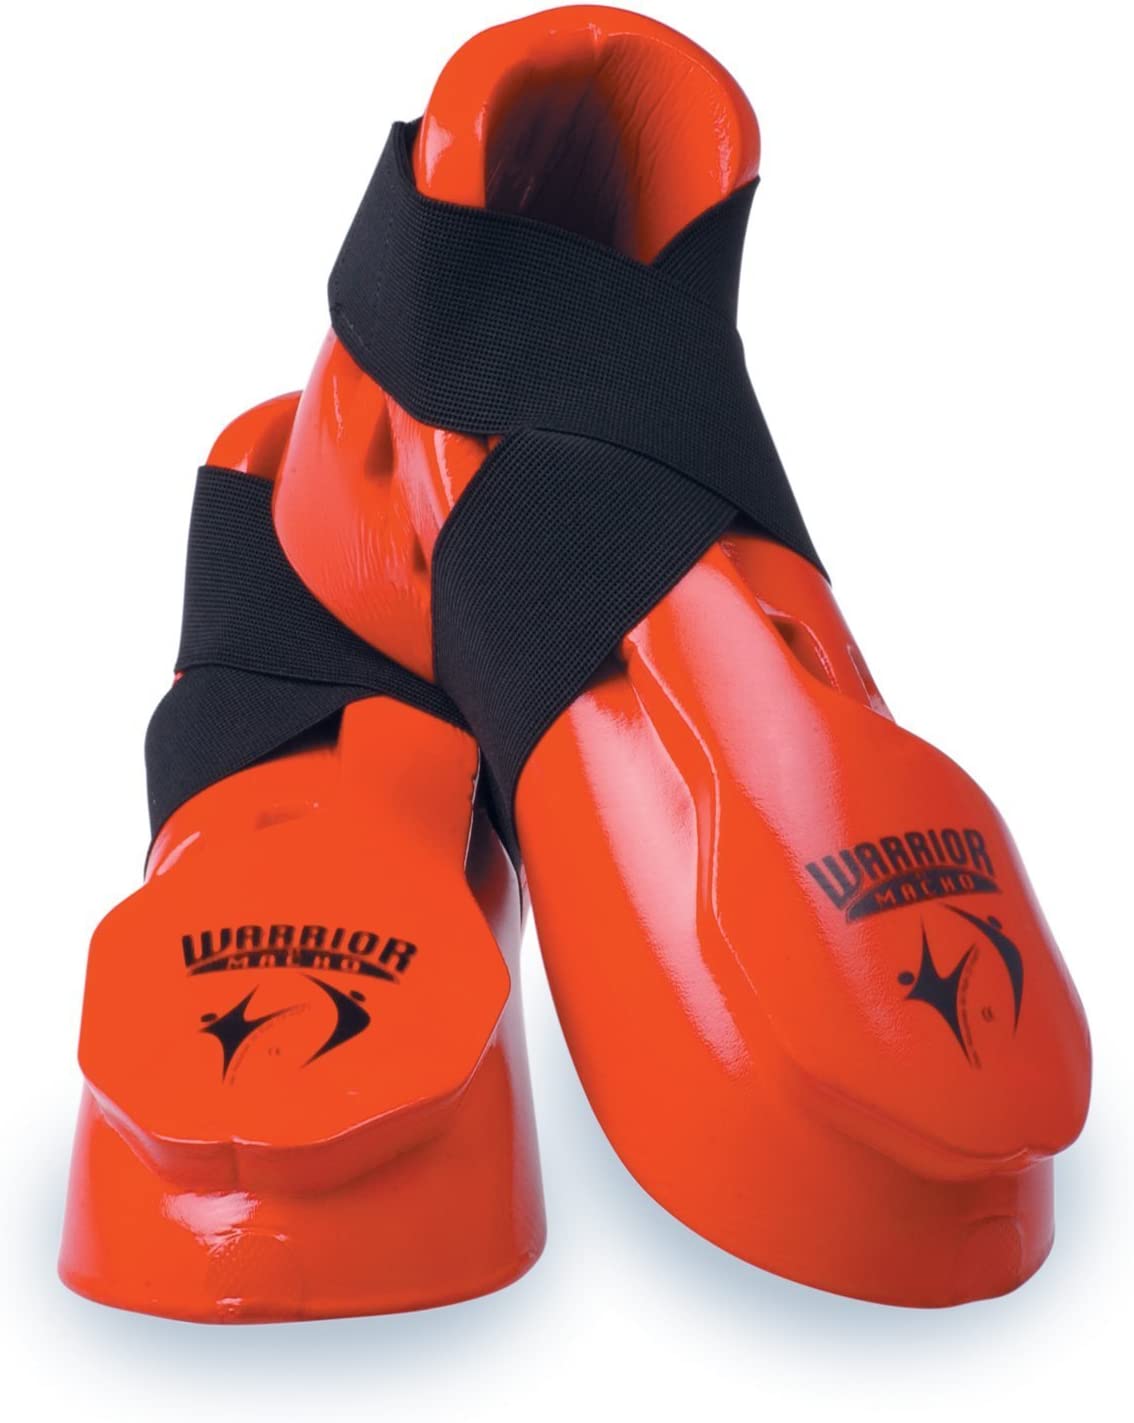 Macho sporting goods Macho Warrior Combo  Karate Sparring Gear Set